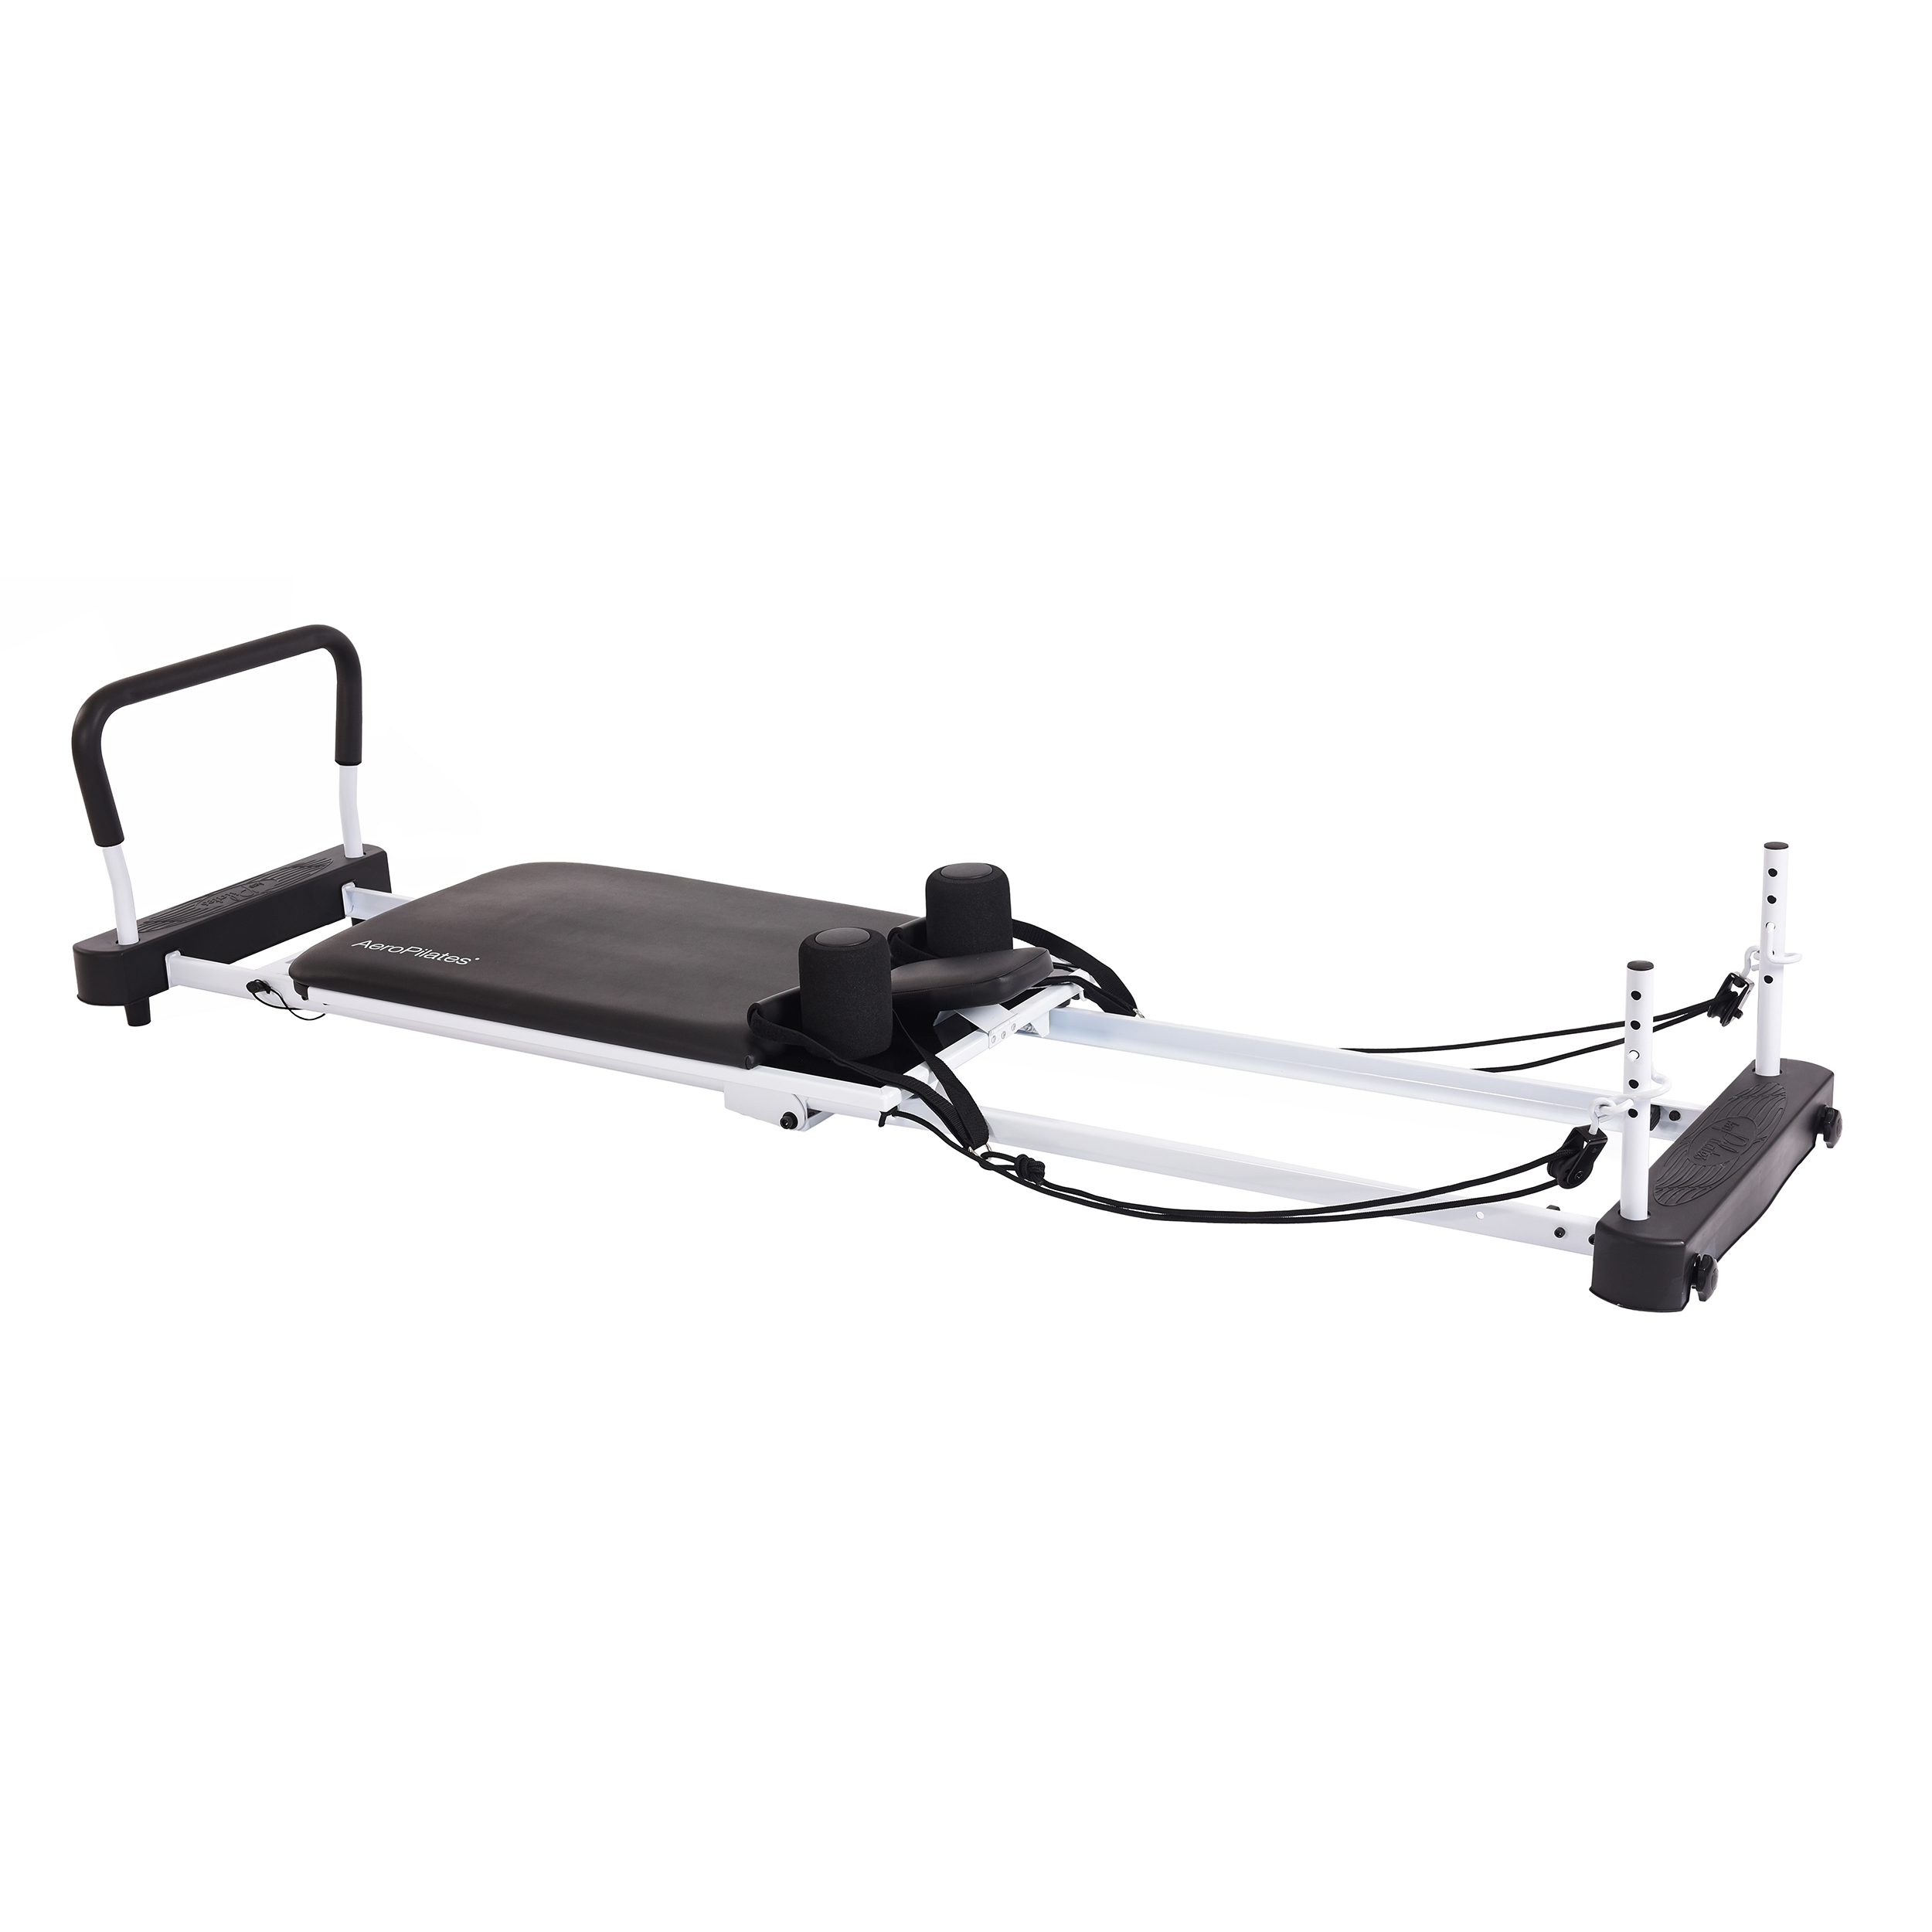 AeroPilates 5010 5-cord Reformer Stamina Products machine equipment at home pilates exercise